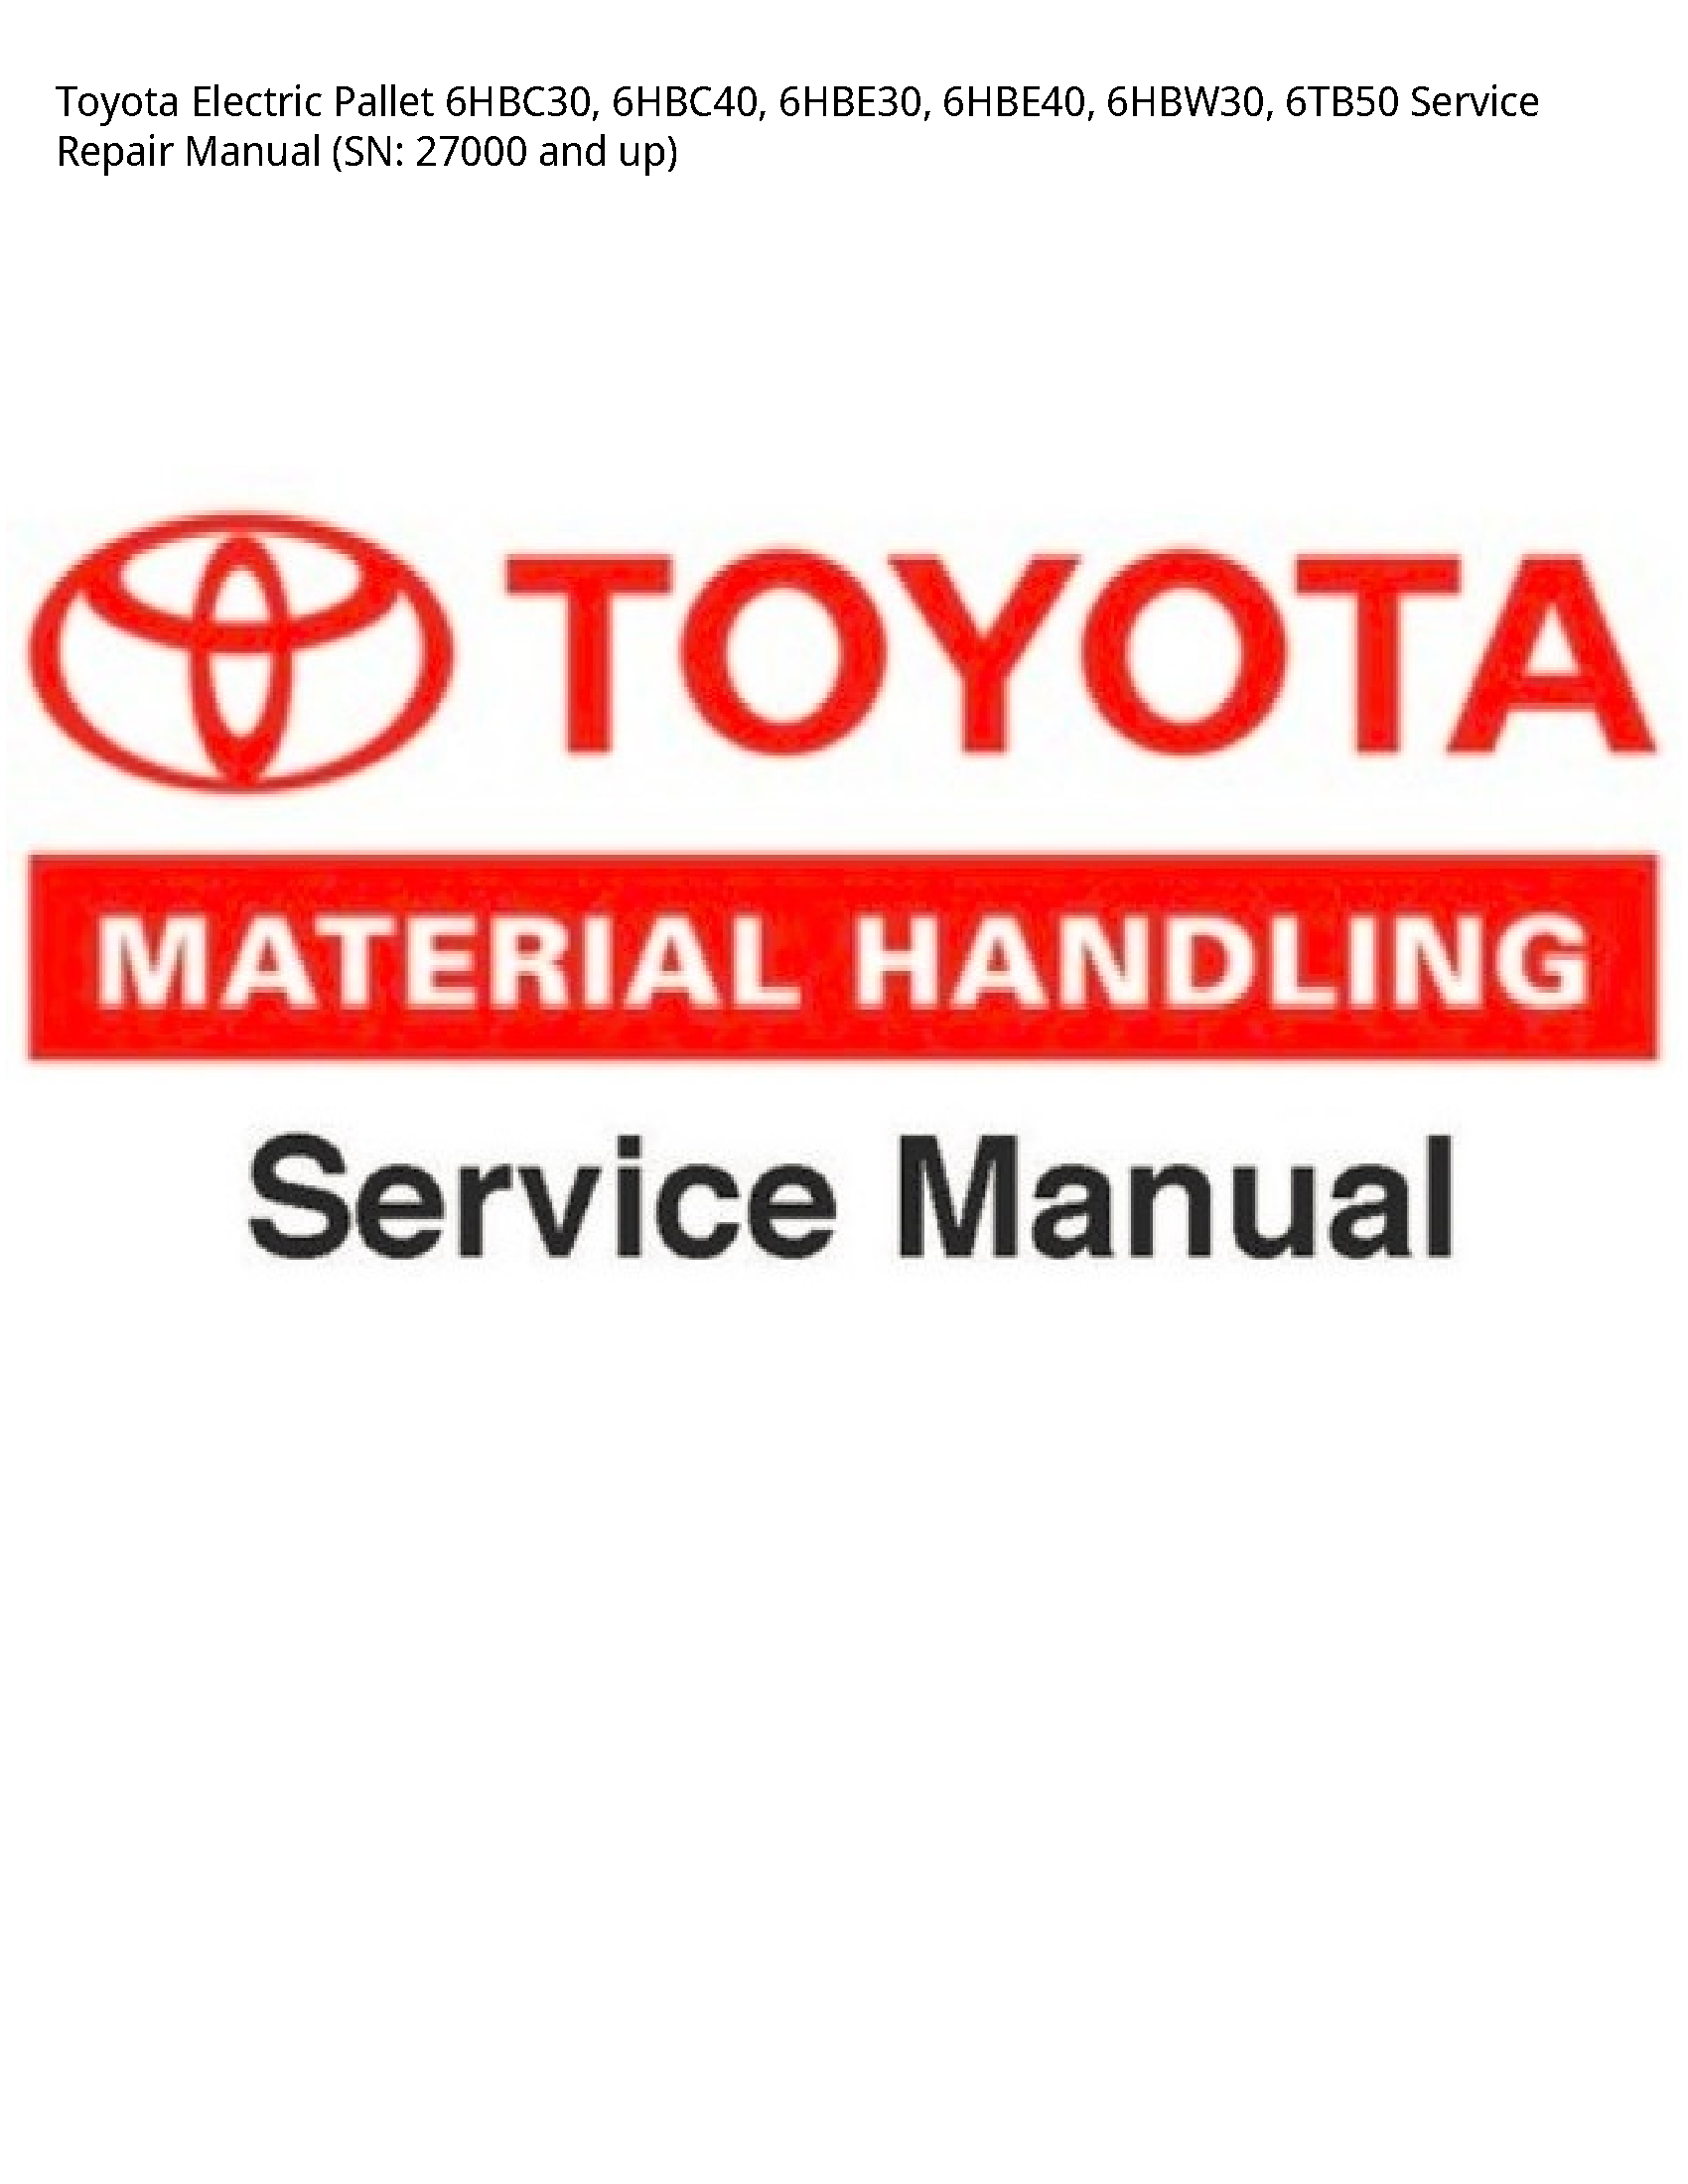 Toyota 6HBC30 Electric Pallet manual